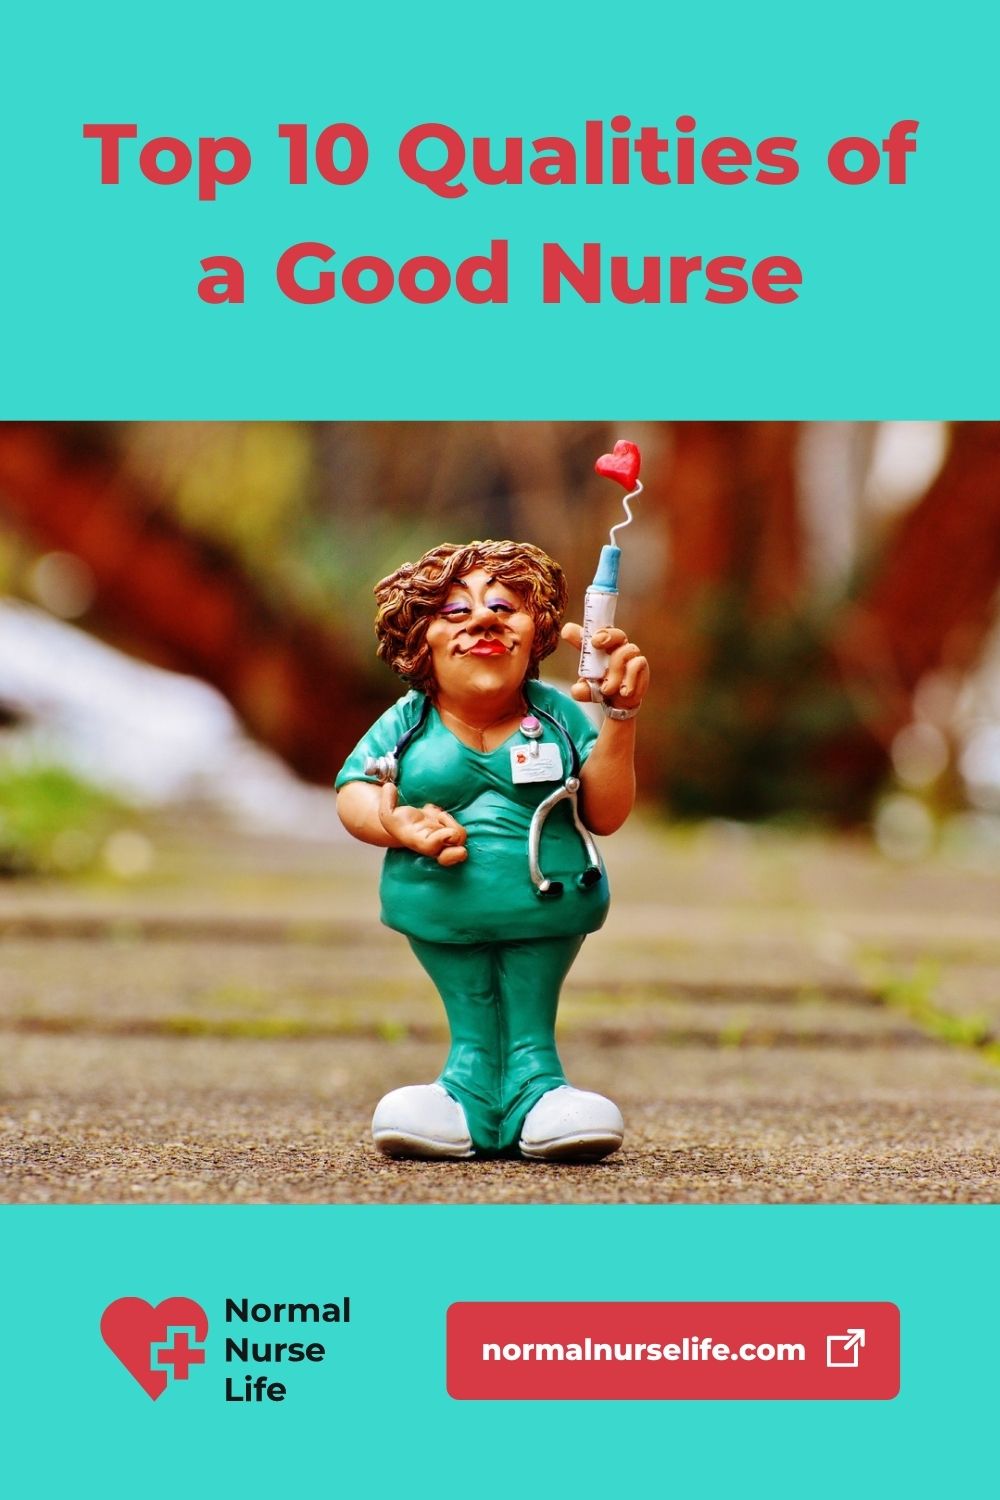 Top 10 qualities of a good nurse